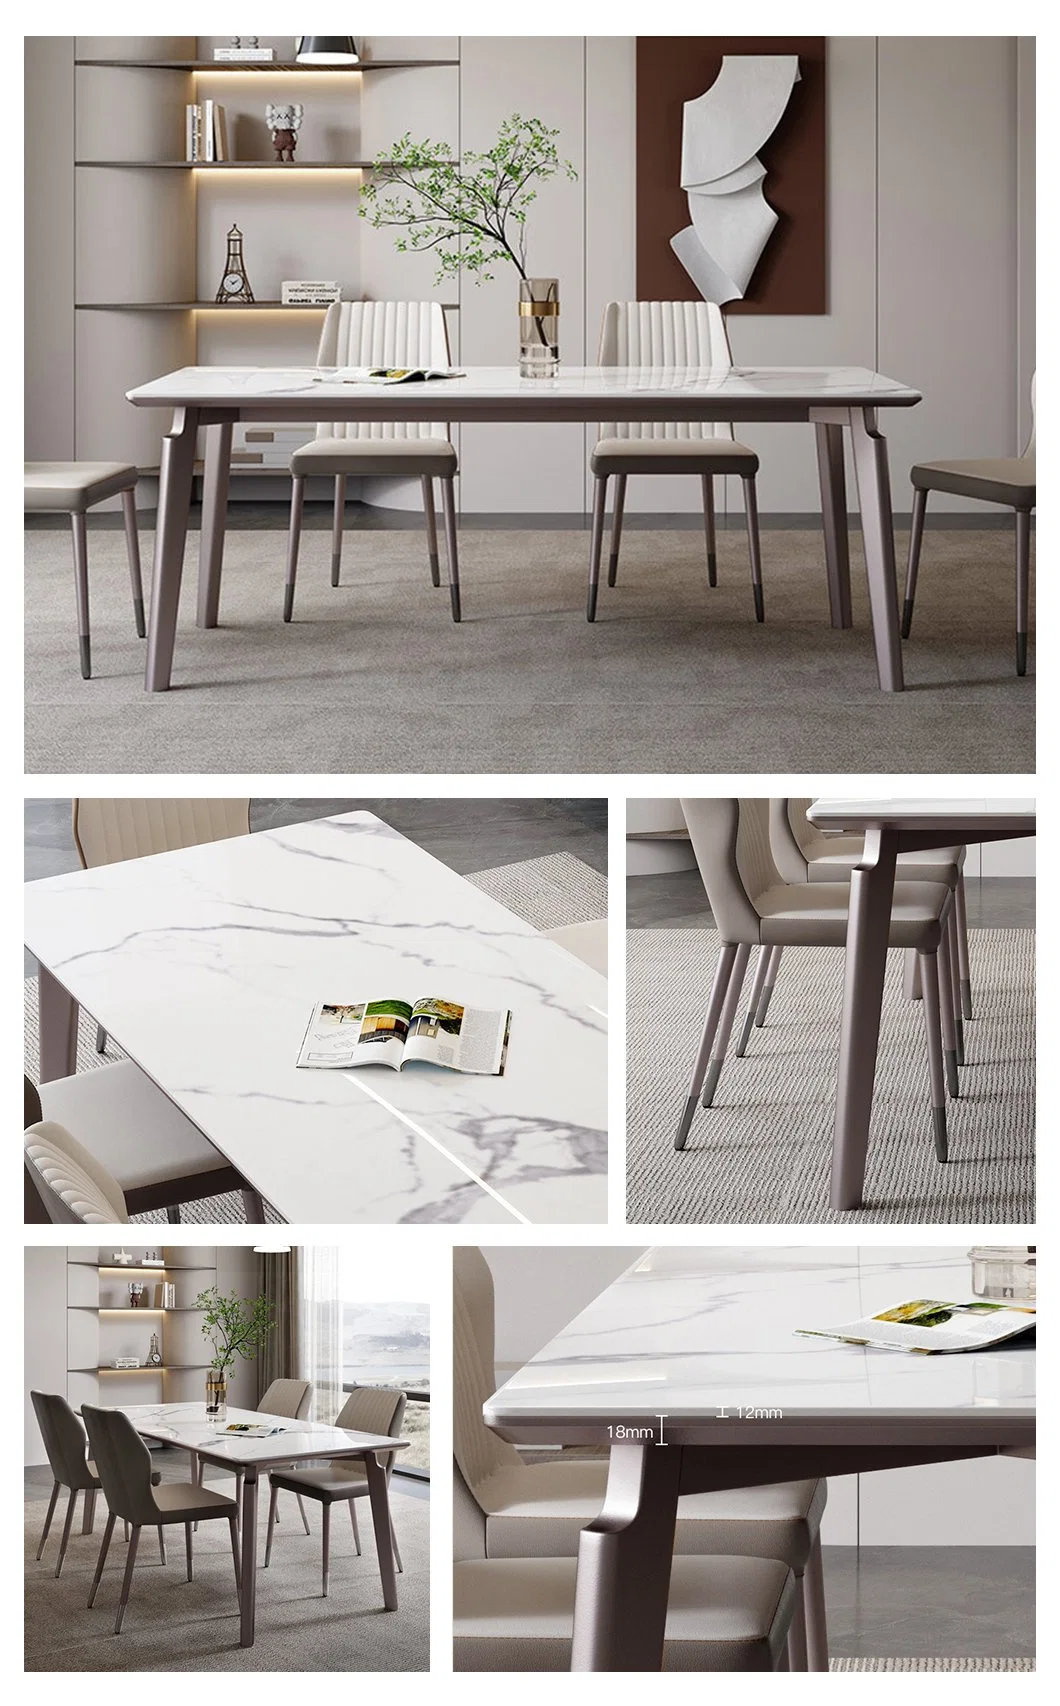 Foshan Sintered Stone Rustic Style Quartz Top Dining Table Interior Home Furniture